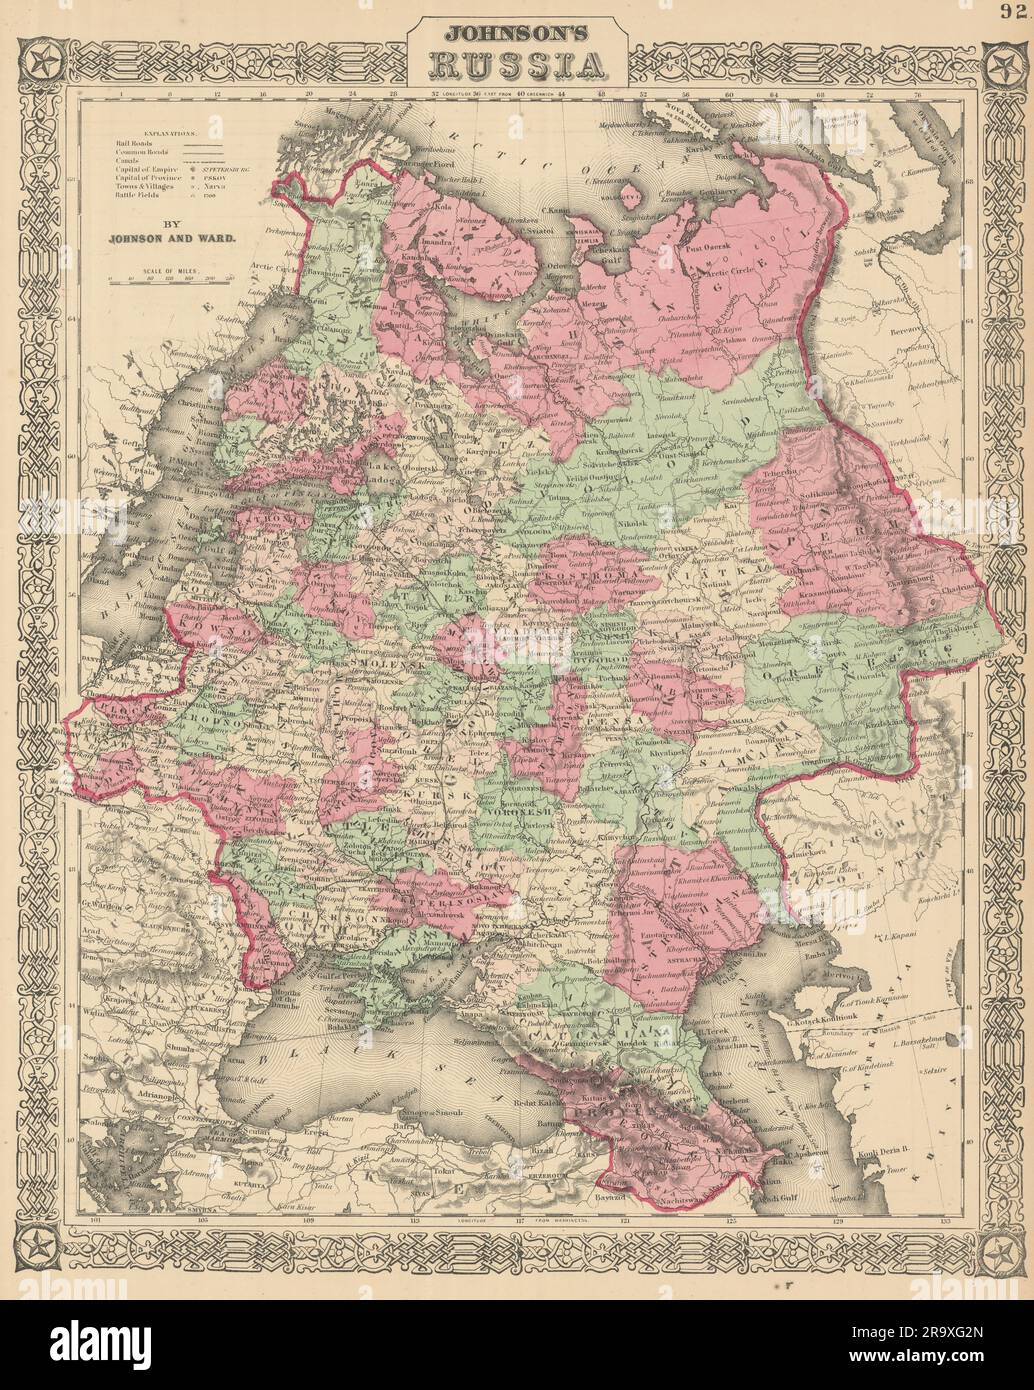 Johnson's Russia in Europe. Ukraine Poland Baltics Finland Caucasus 1866 map Stock Photo